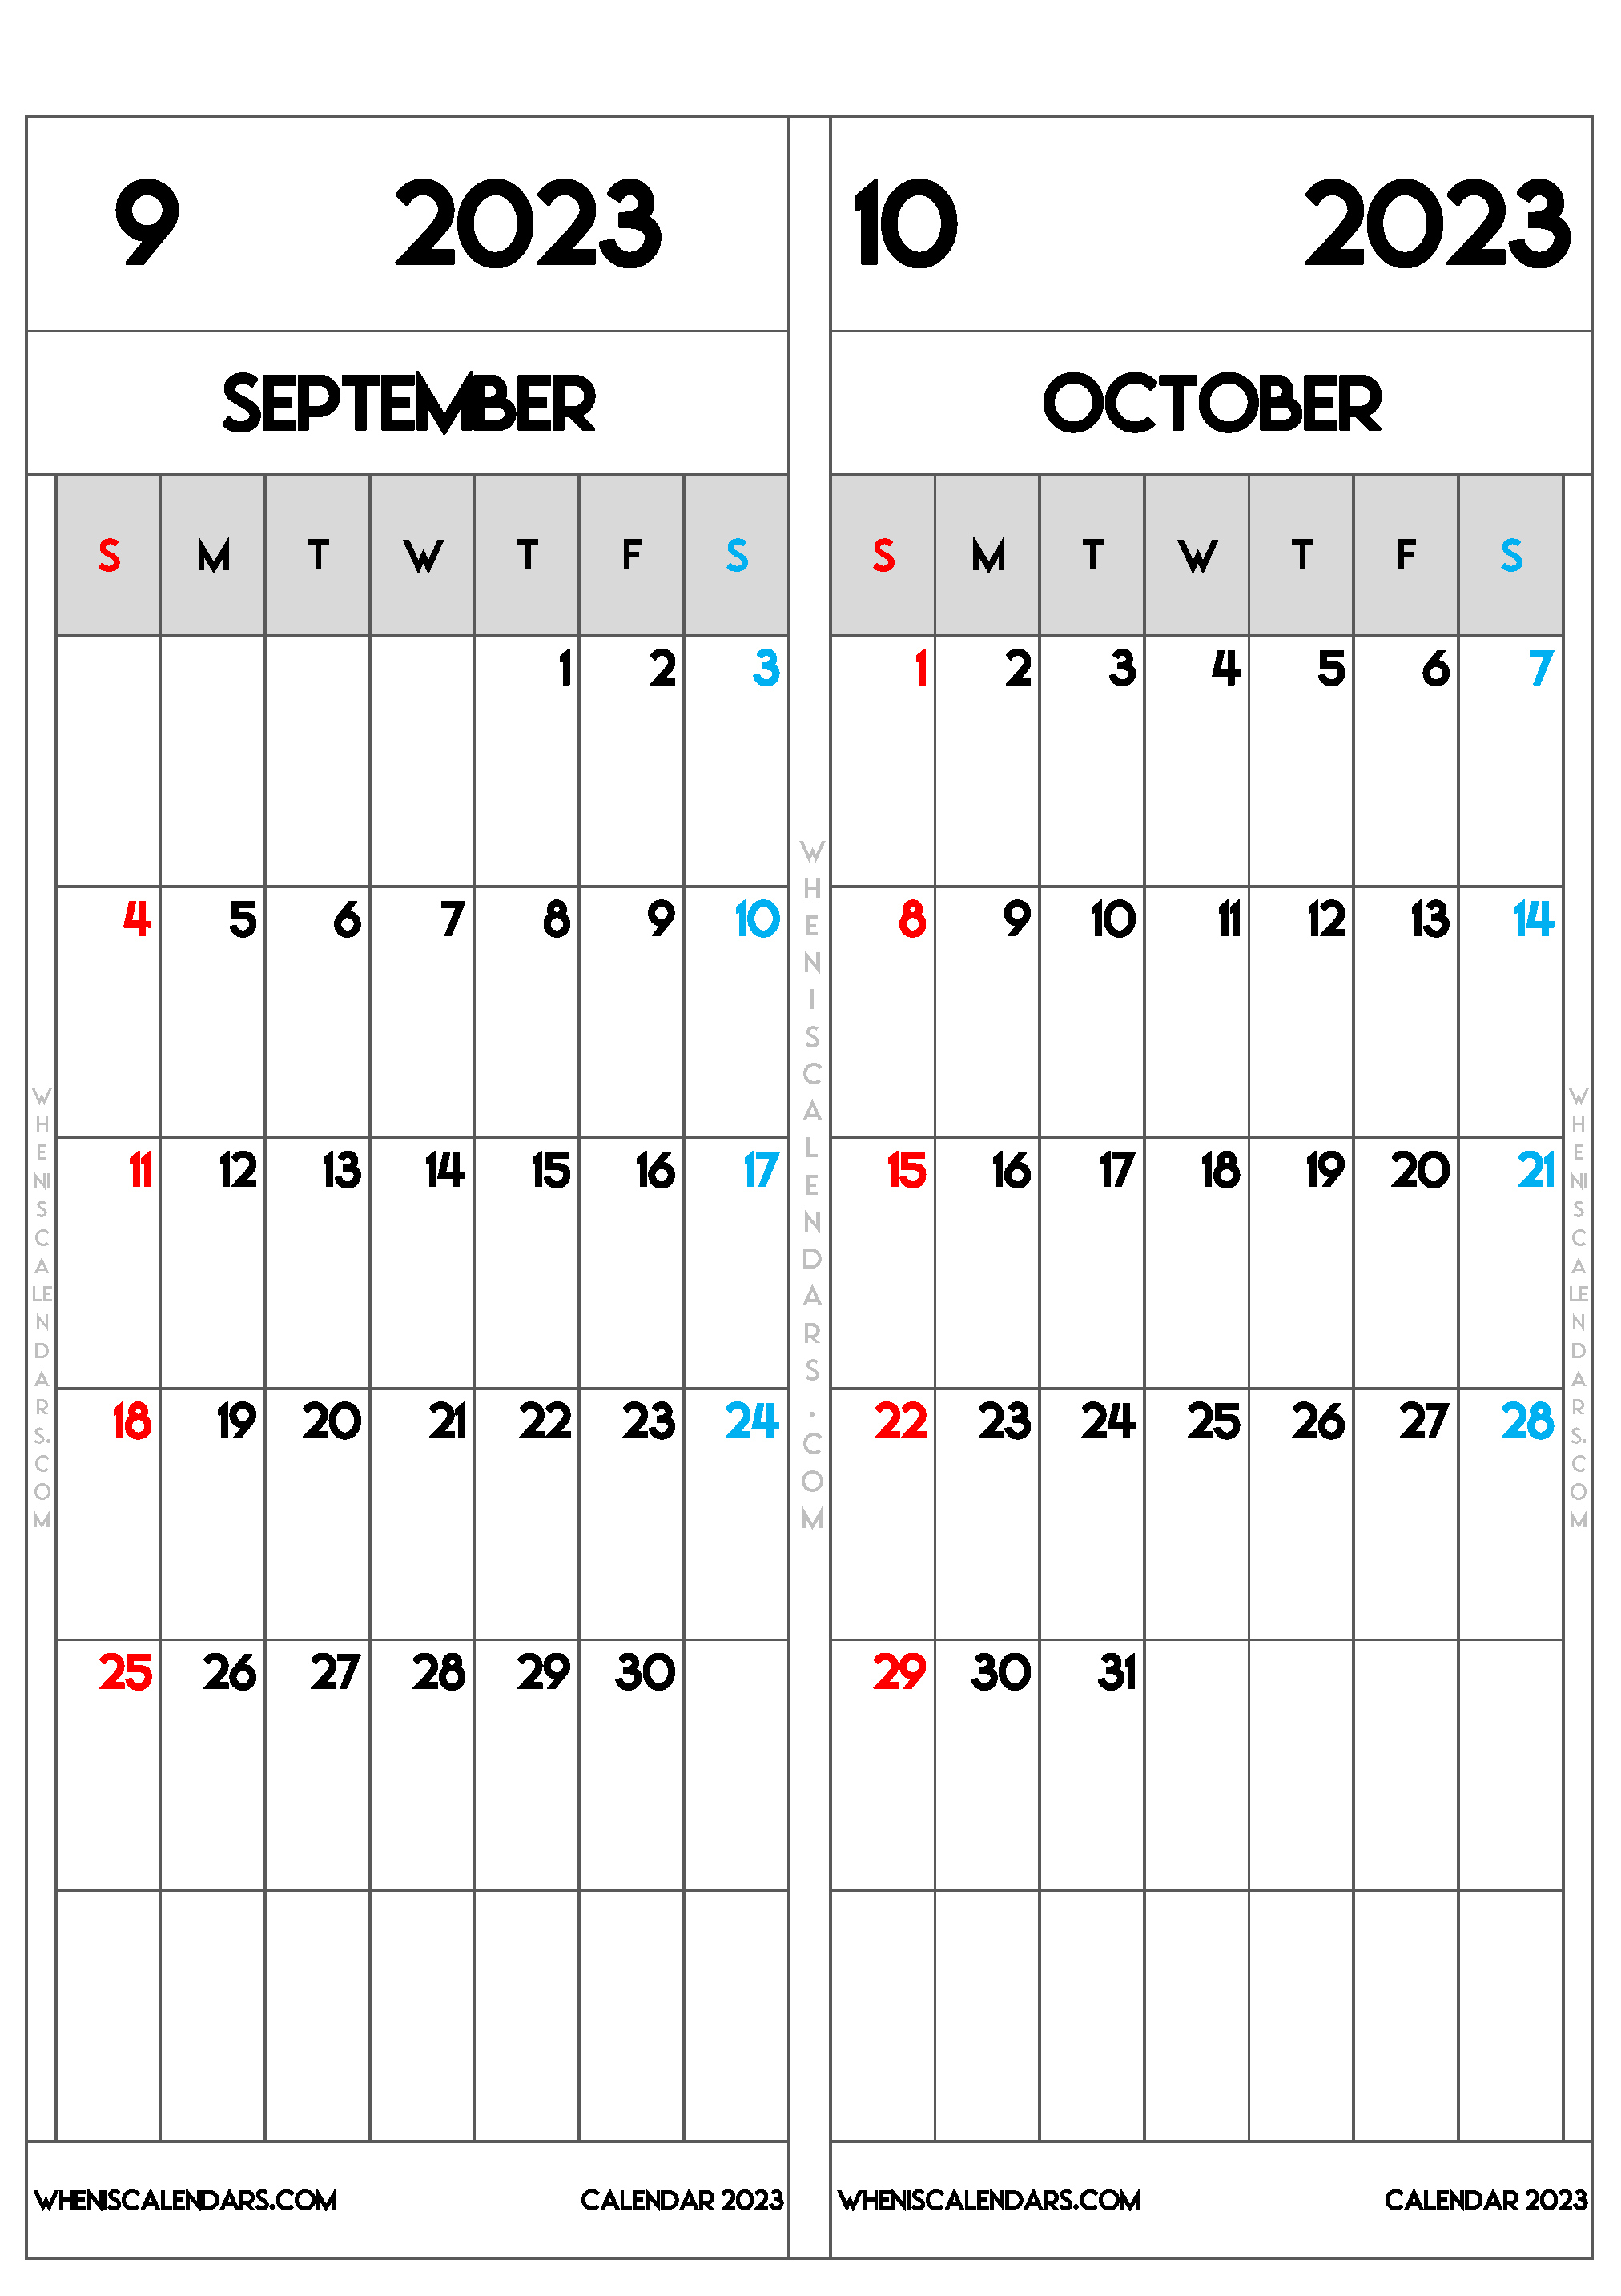 Download Free September October 2023 Calendar Printable as PDF and PNG Image